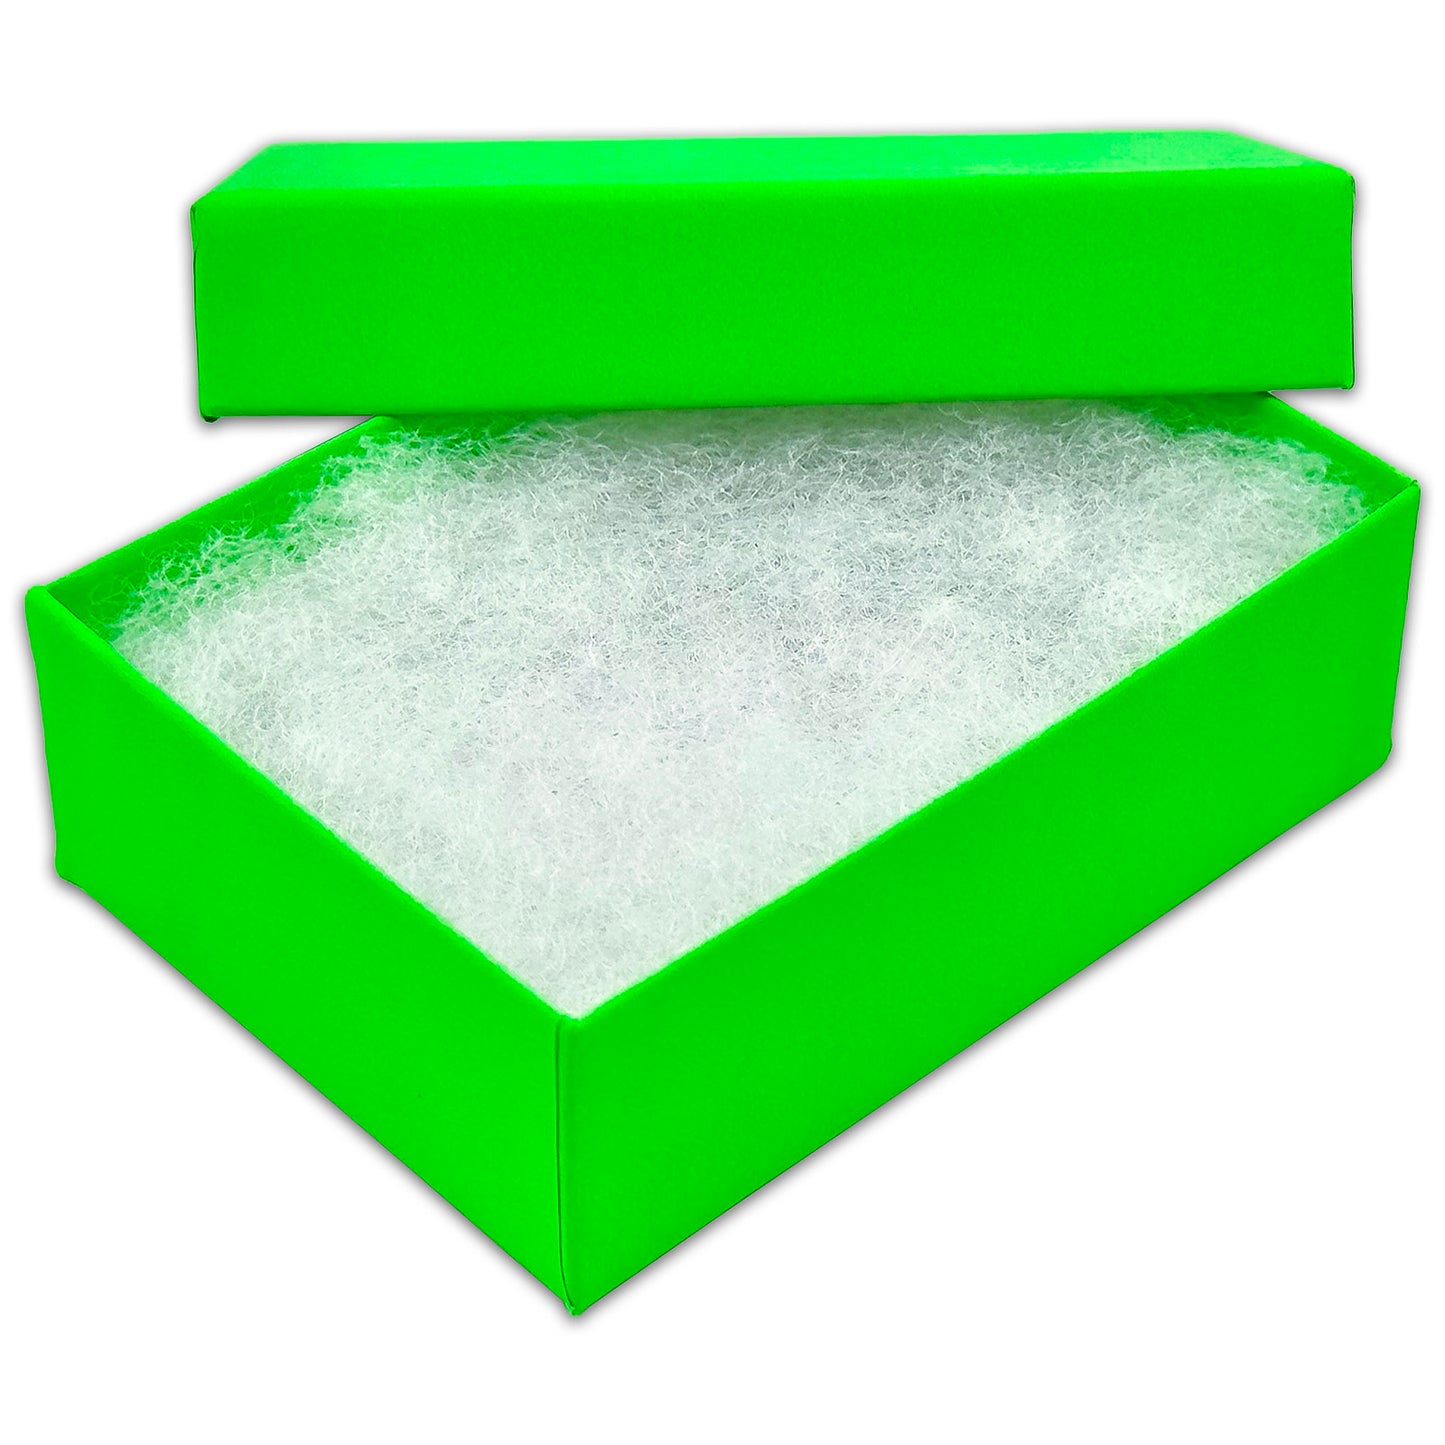 2 5/8" x 1 5/8" x 1" Neon Green Cotton Filled Paper Box